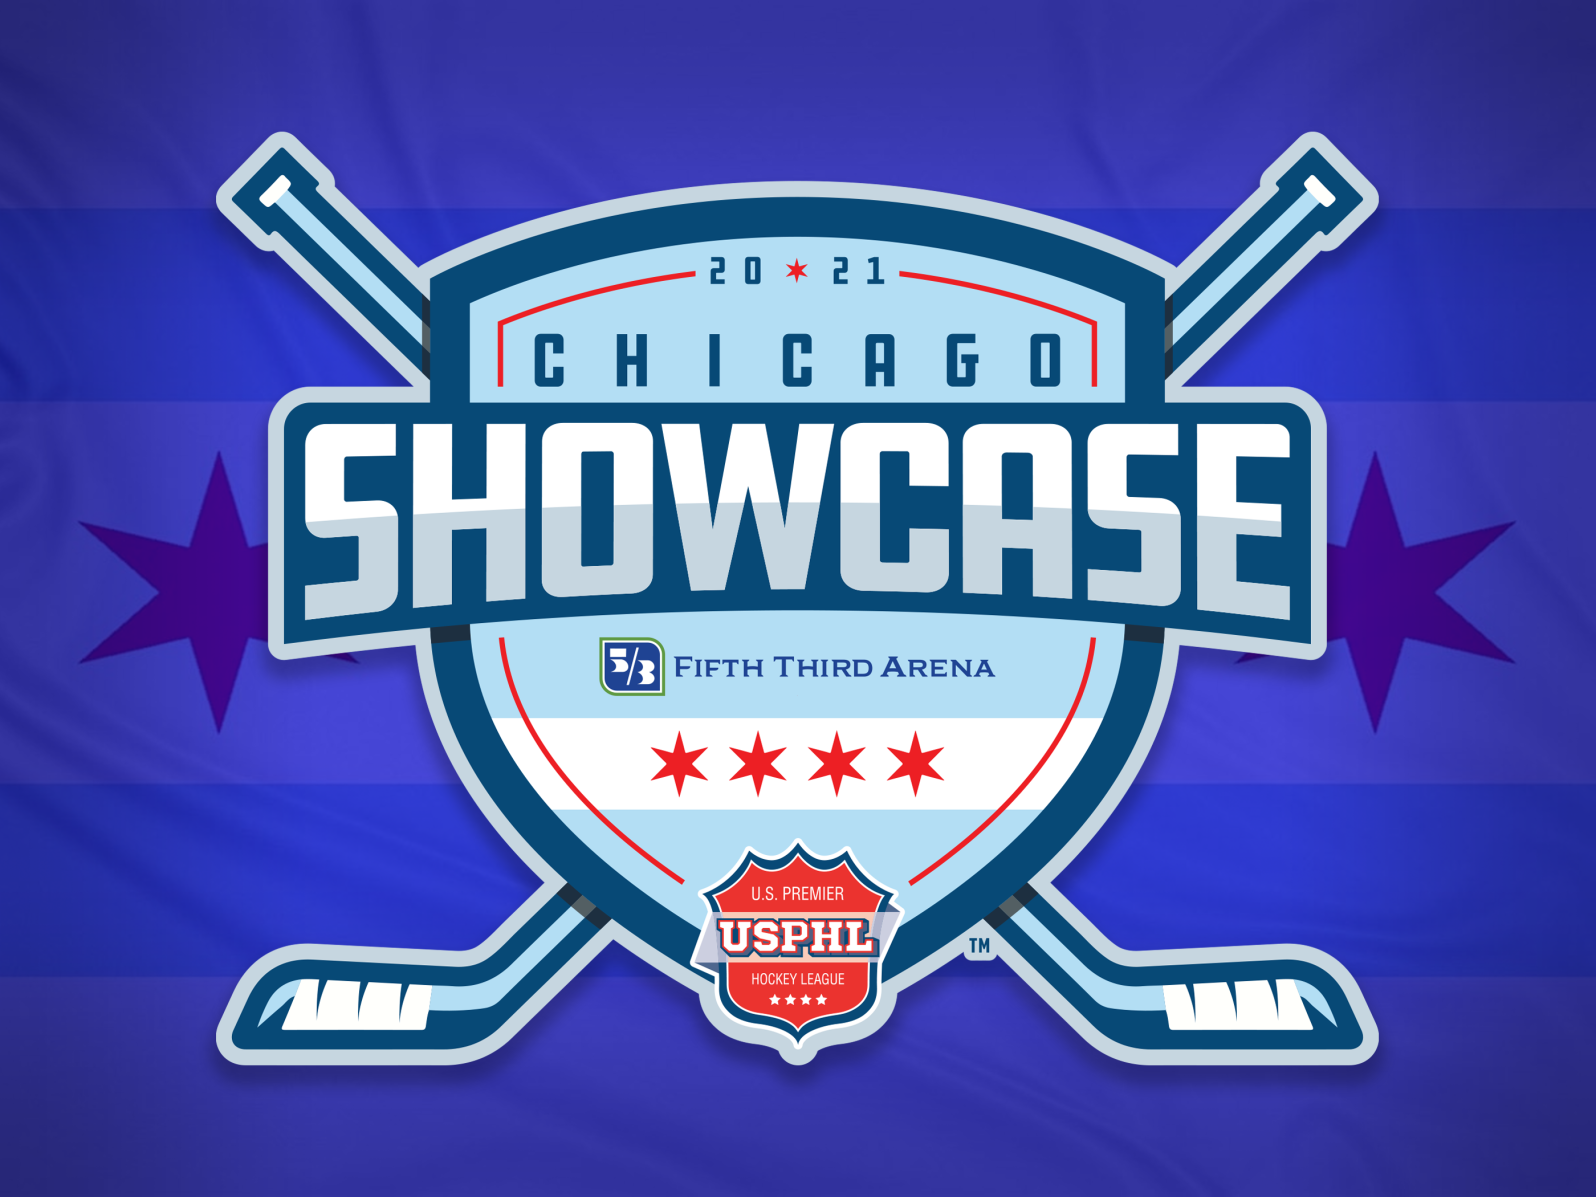 USPHL Chicago Showcase Logo by Amador Creative on Dribbble